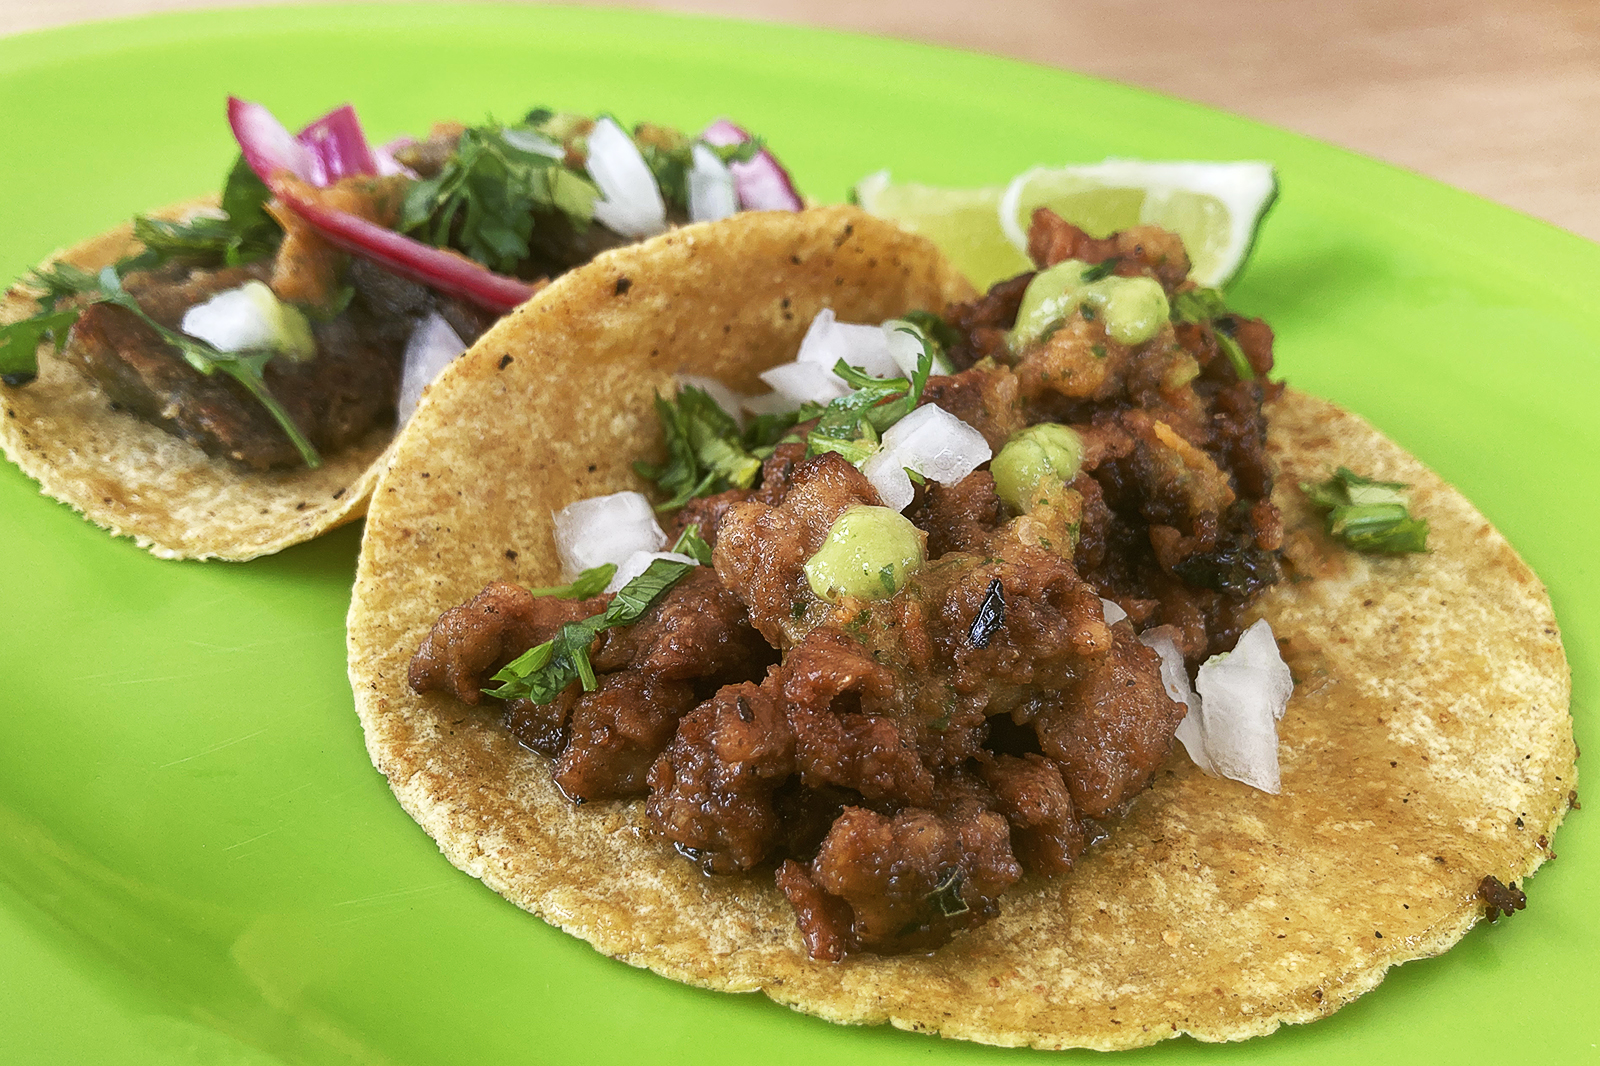 Chew & Lush: Top 5 Vegan Restaurants in Tulum featuring Vegan Tacos El Bajon